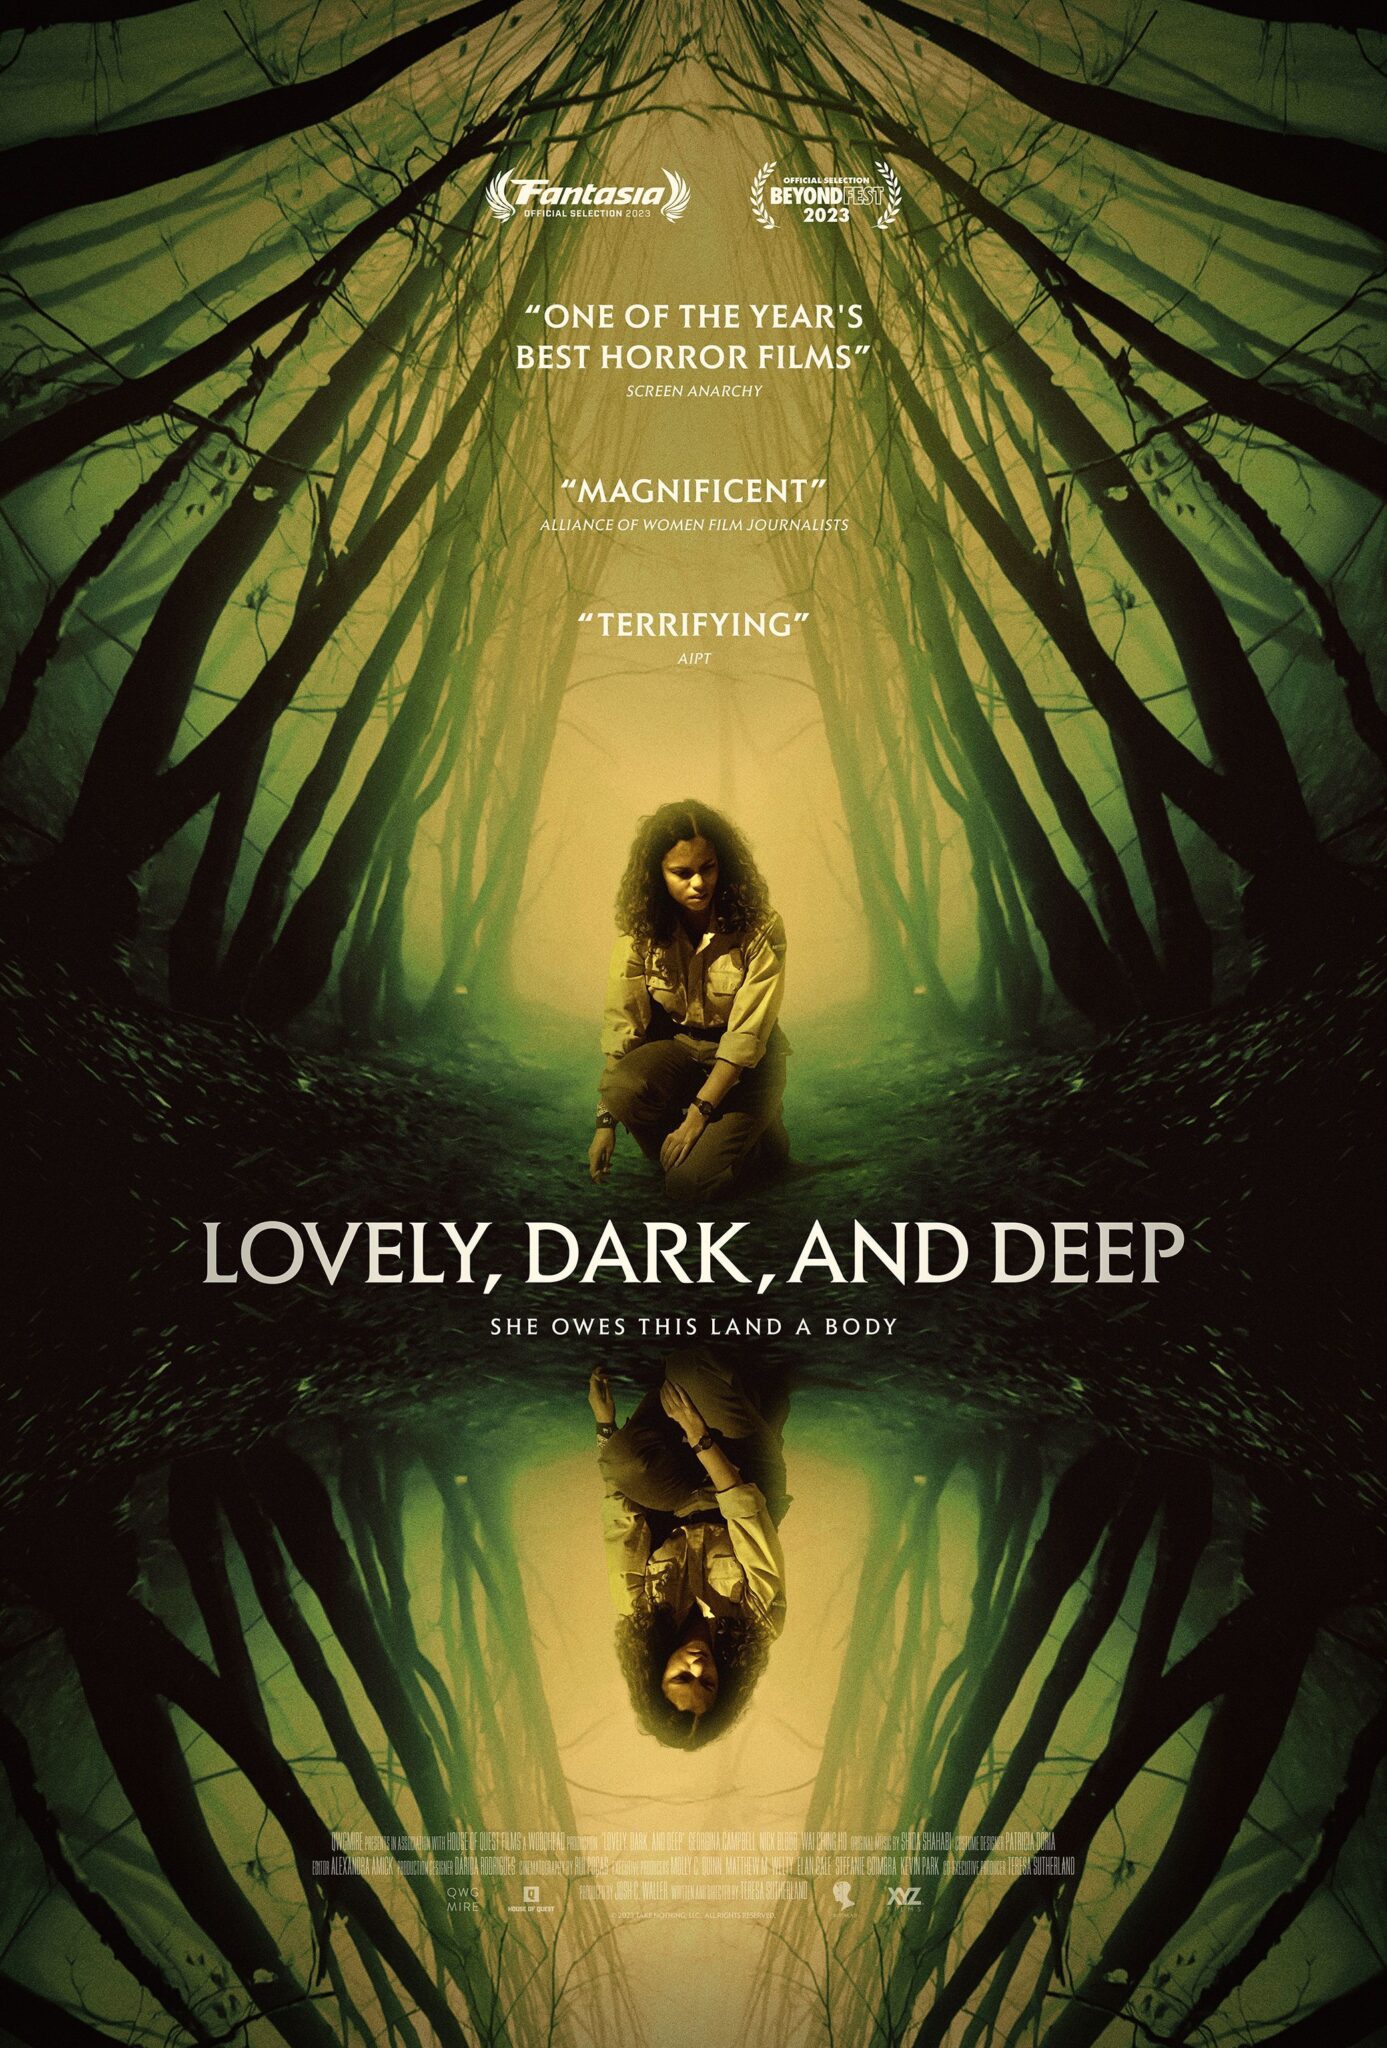 Lovely Dark and Deep Press Release - Moviehooker